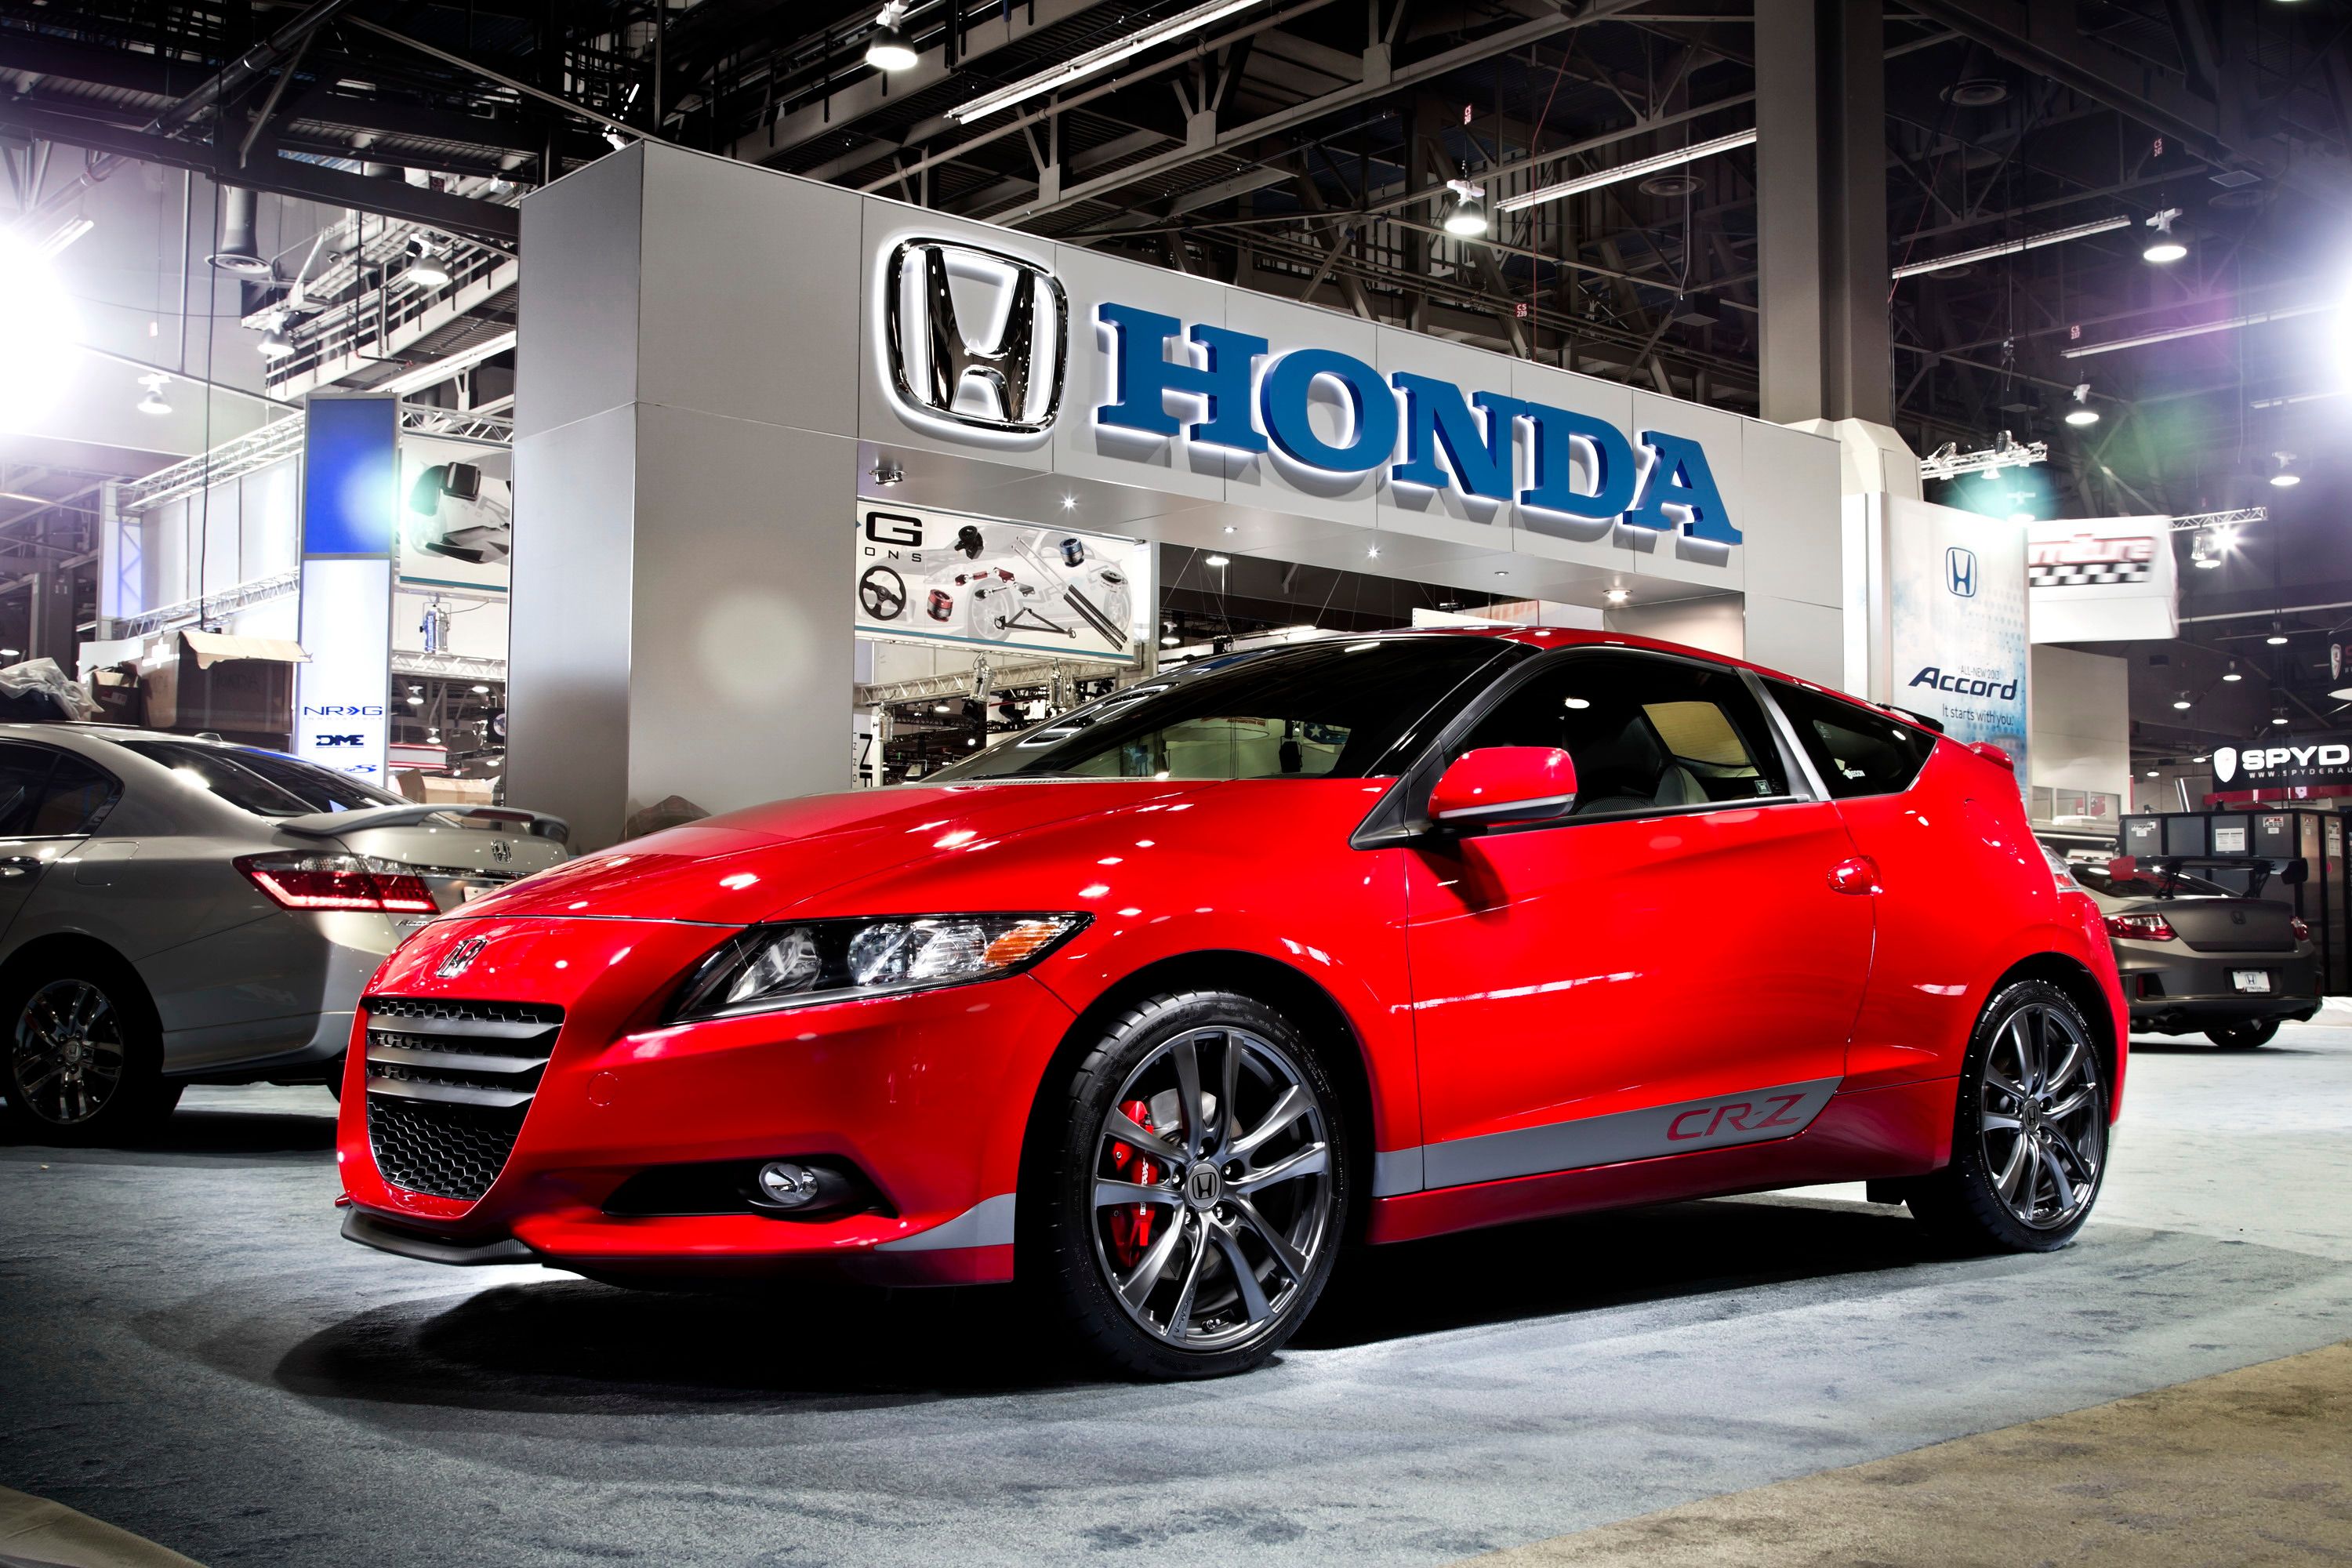 2012 Honda HPD Supercharged CR-Z Concept